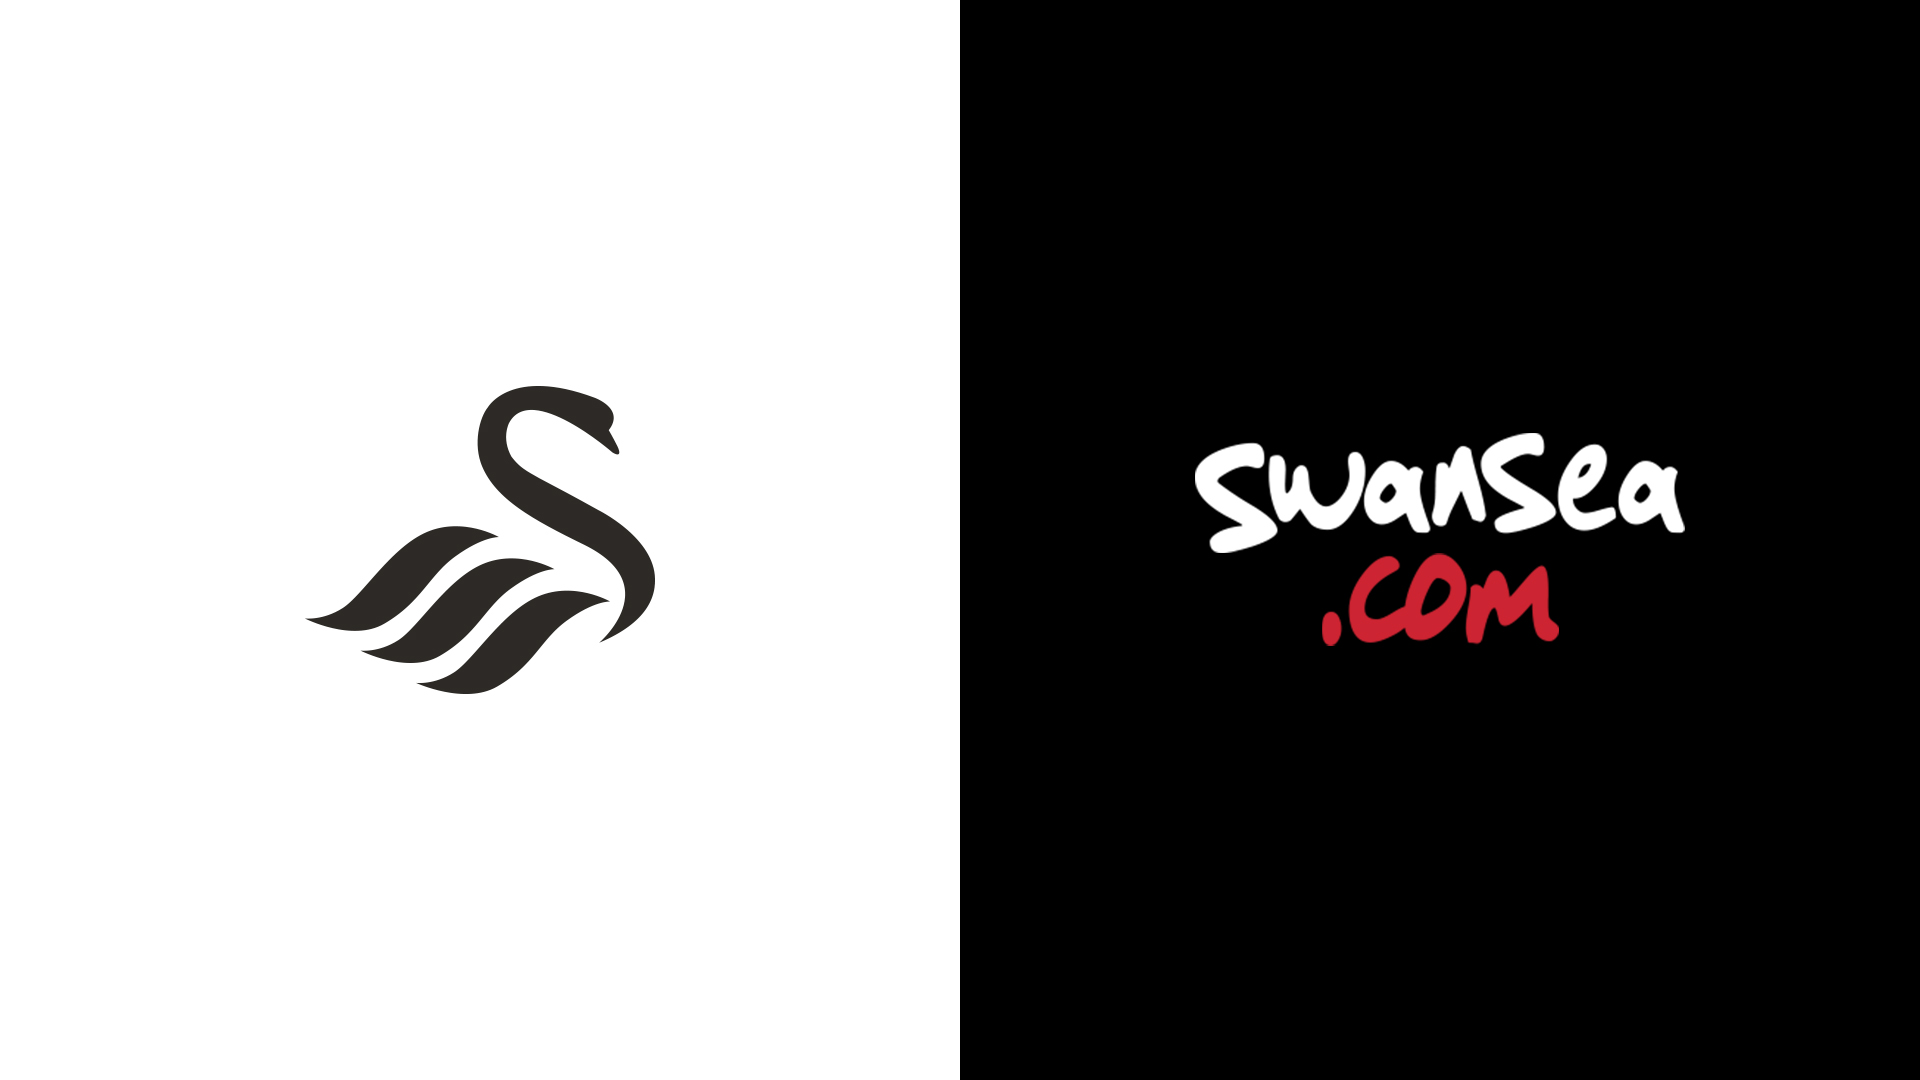 Swansea.com partner lockup